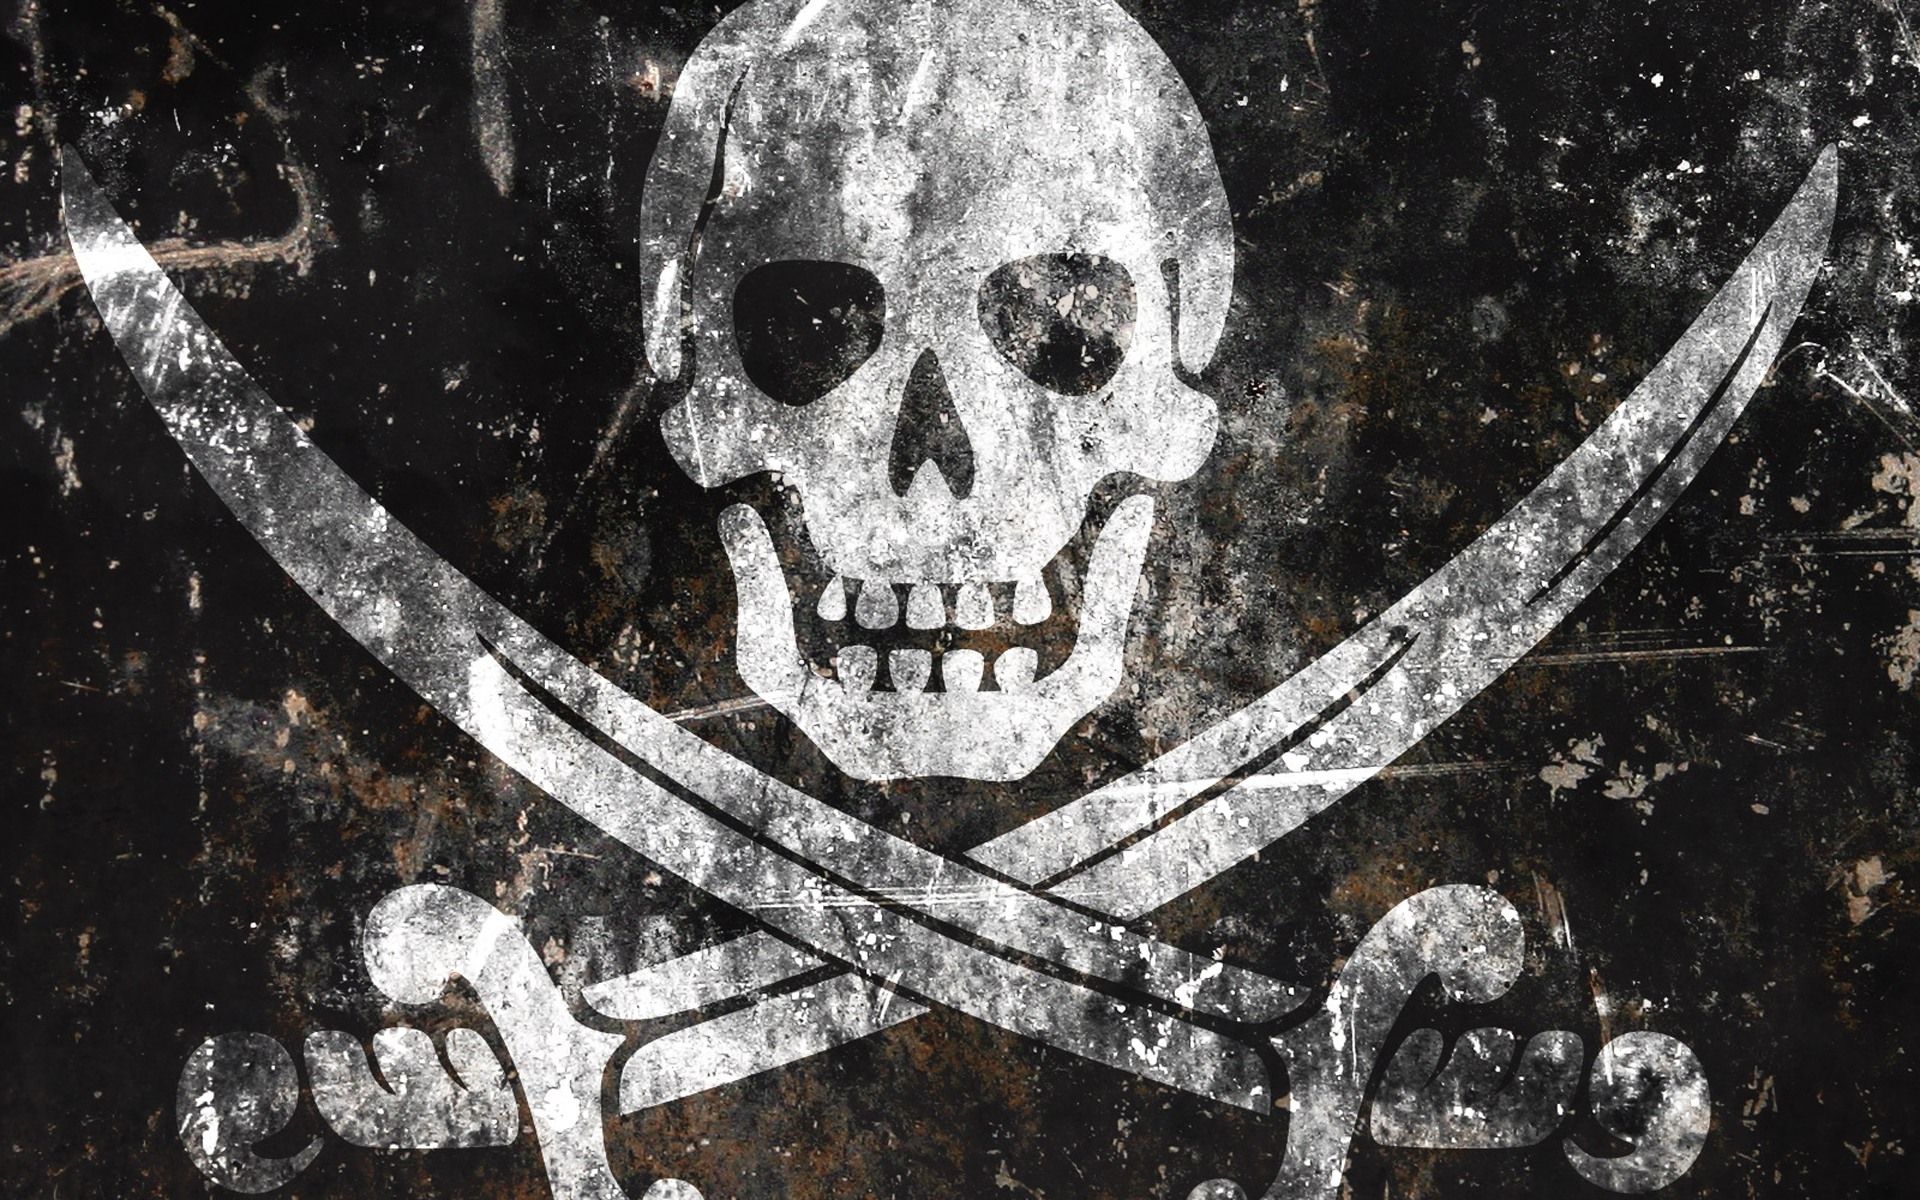 Pirate Desktop Wallpaper